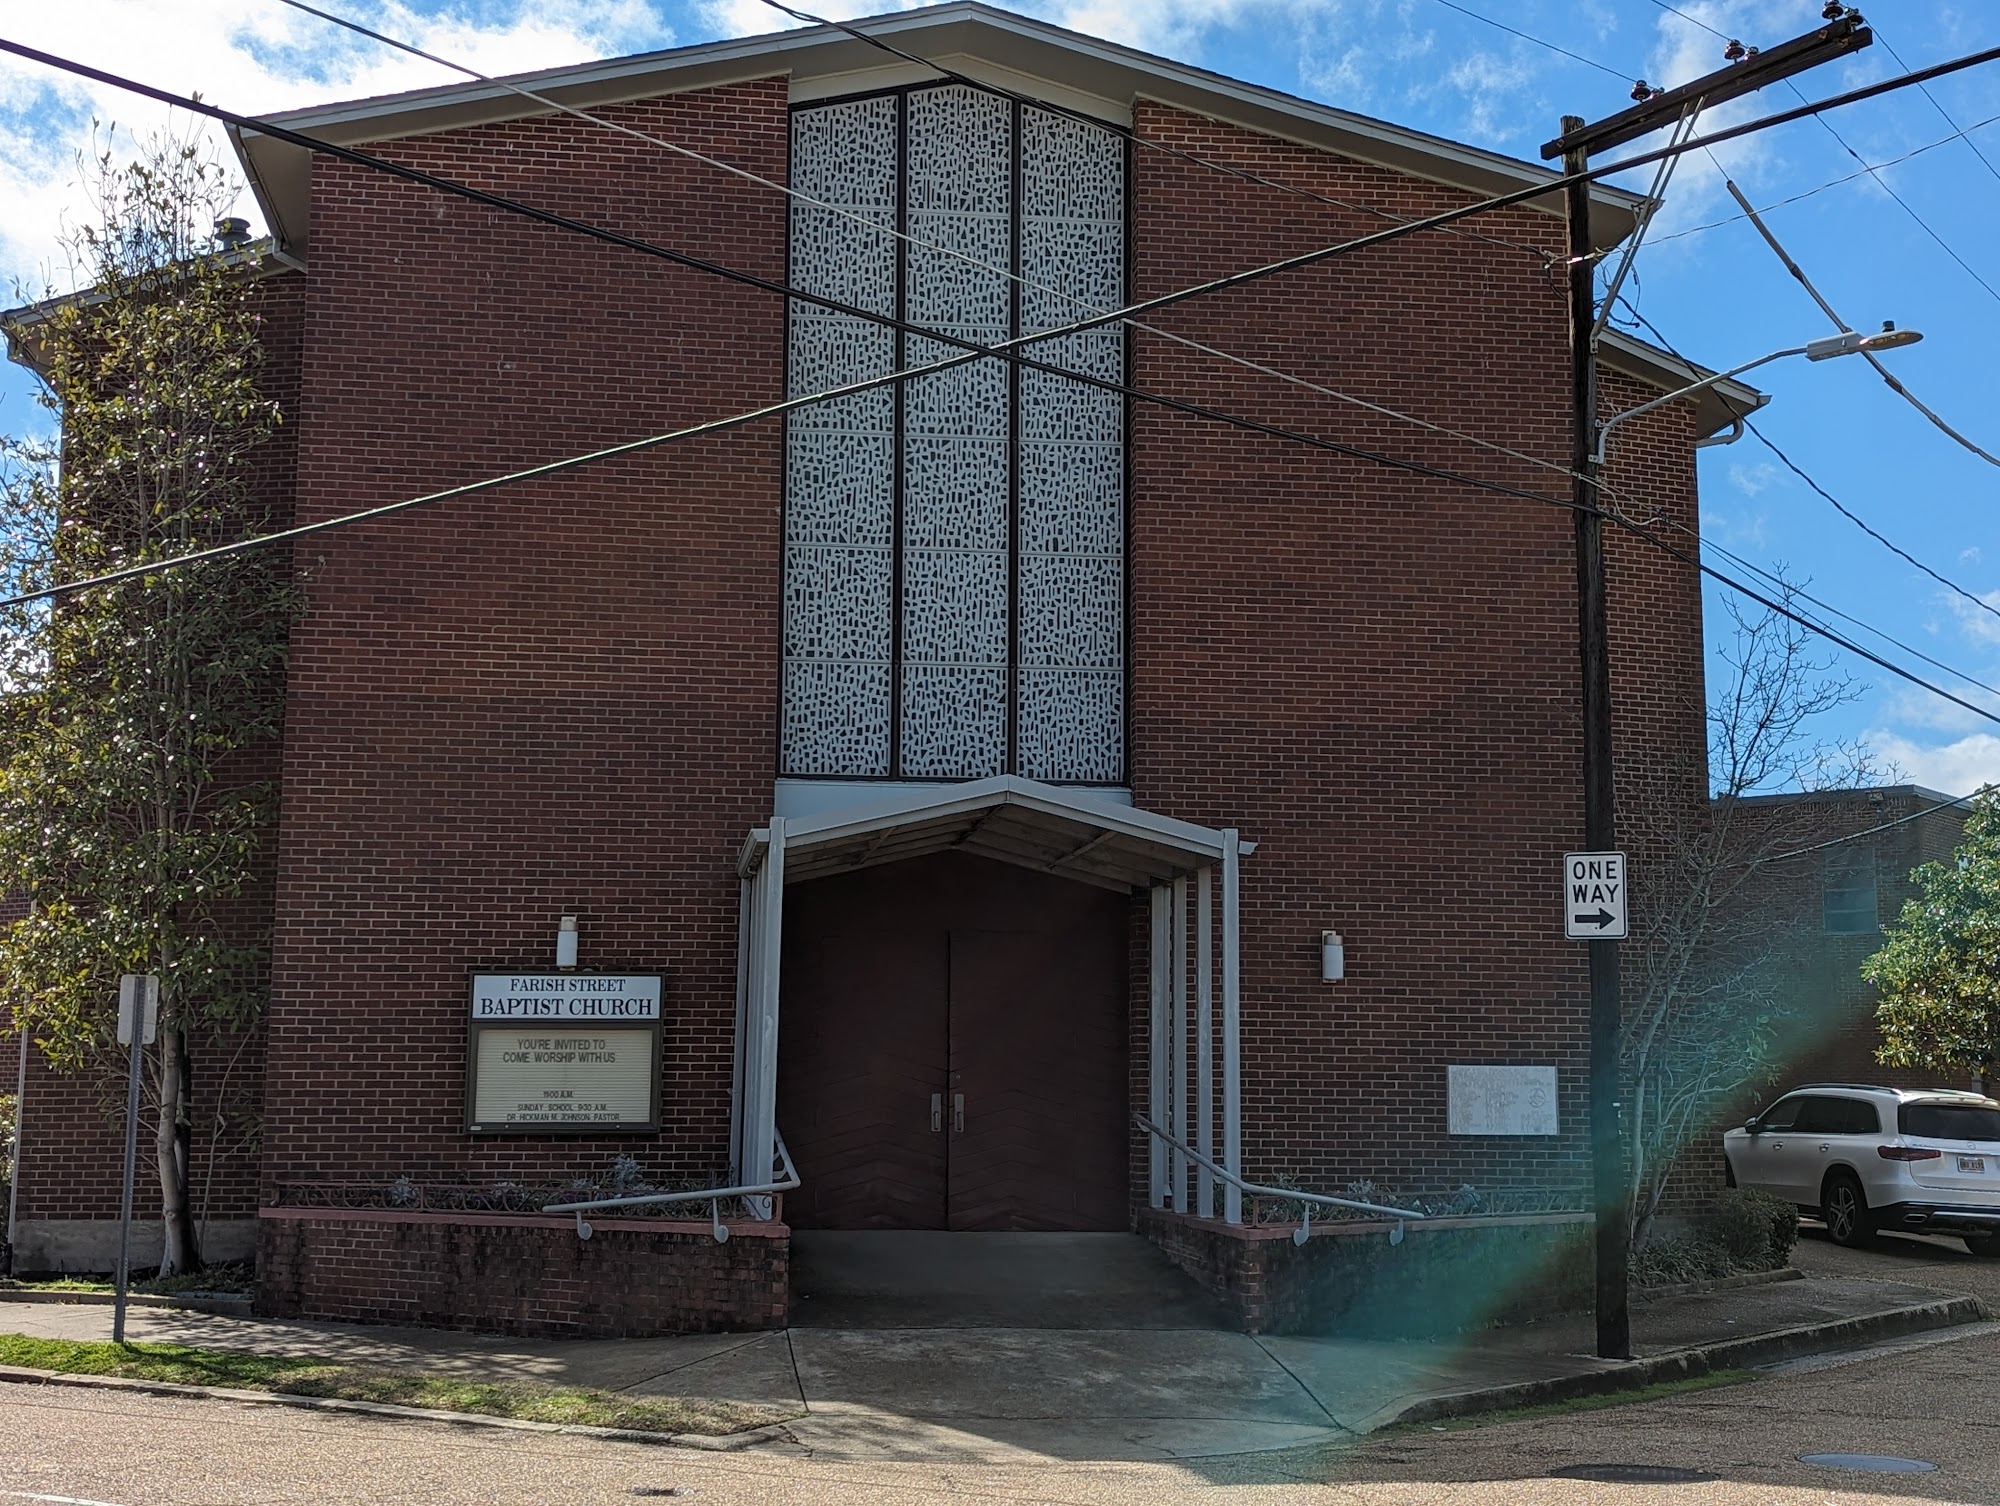 Farish Street Baptist Church